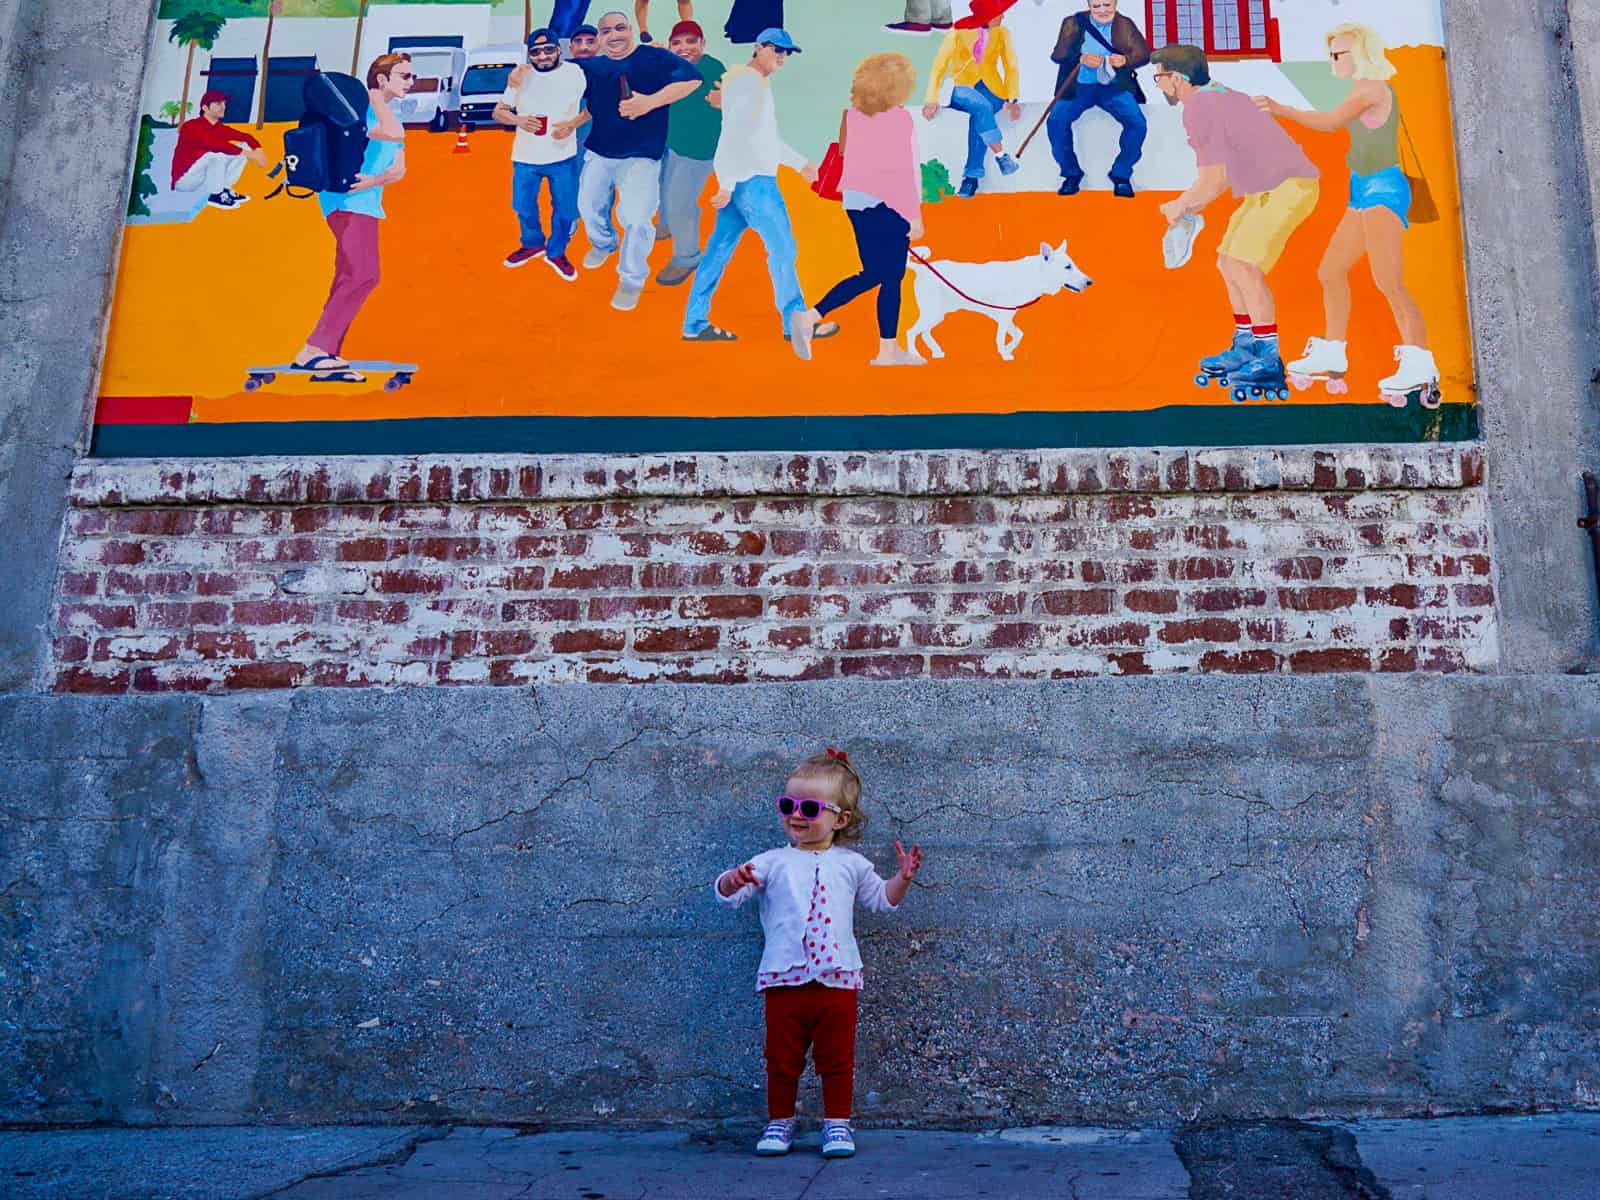 funk zone graffiti wall - weekend guide to Santa Barbara with kids